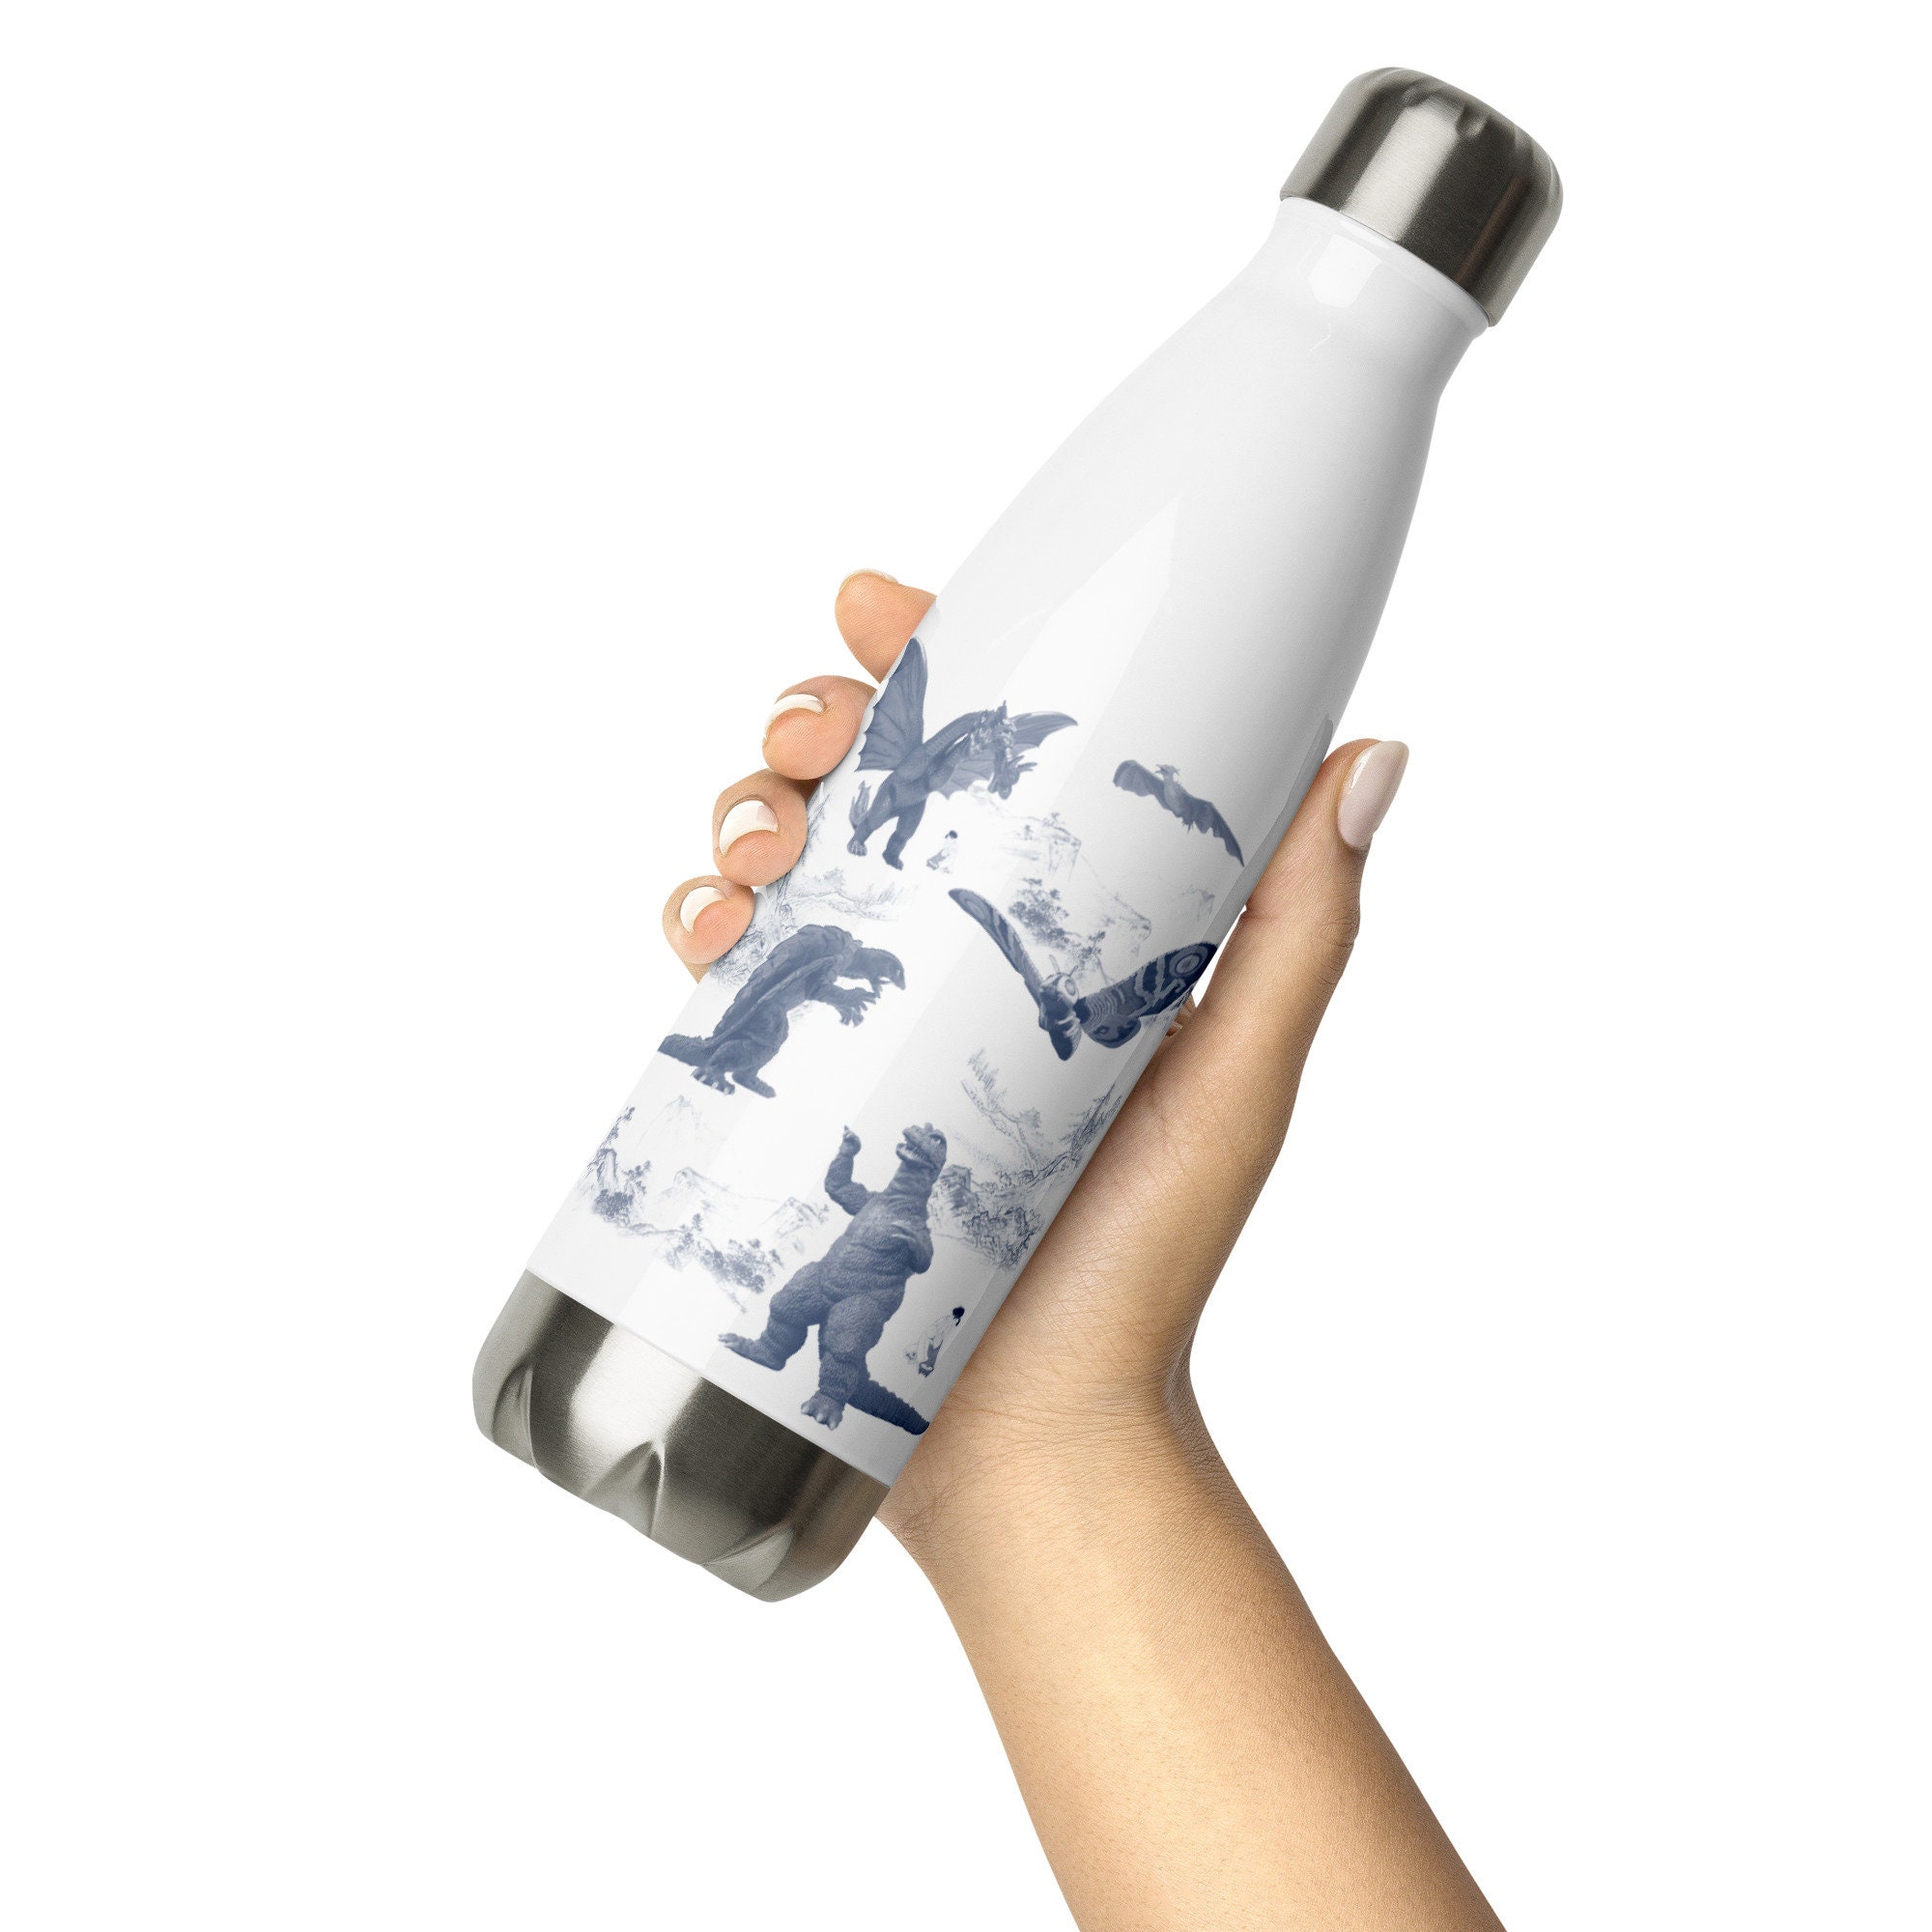 Vegan Godzilla Water Bottle